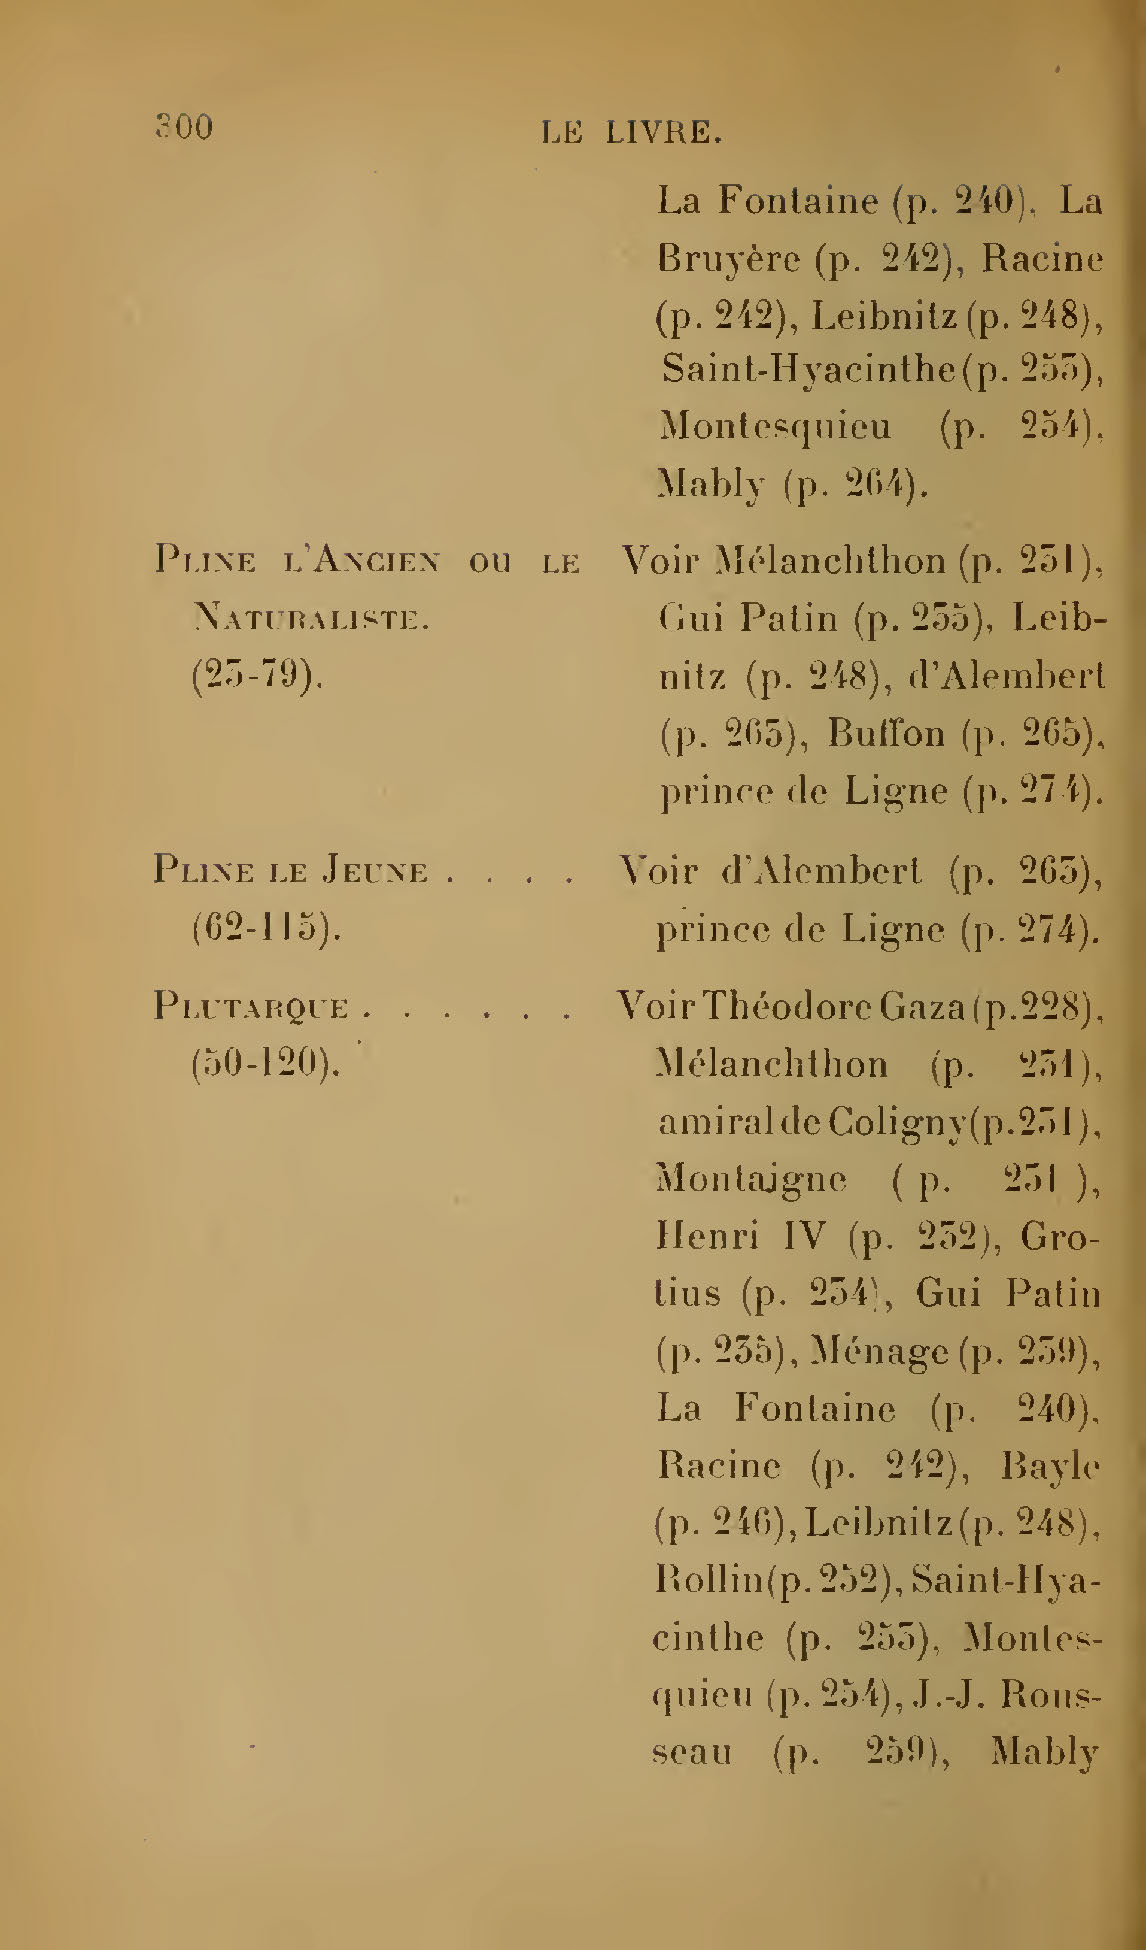 Albert Cim, Le Livre, t. I, p. 300.